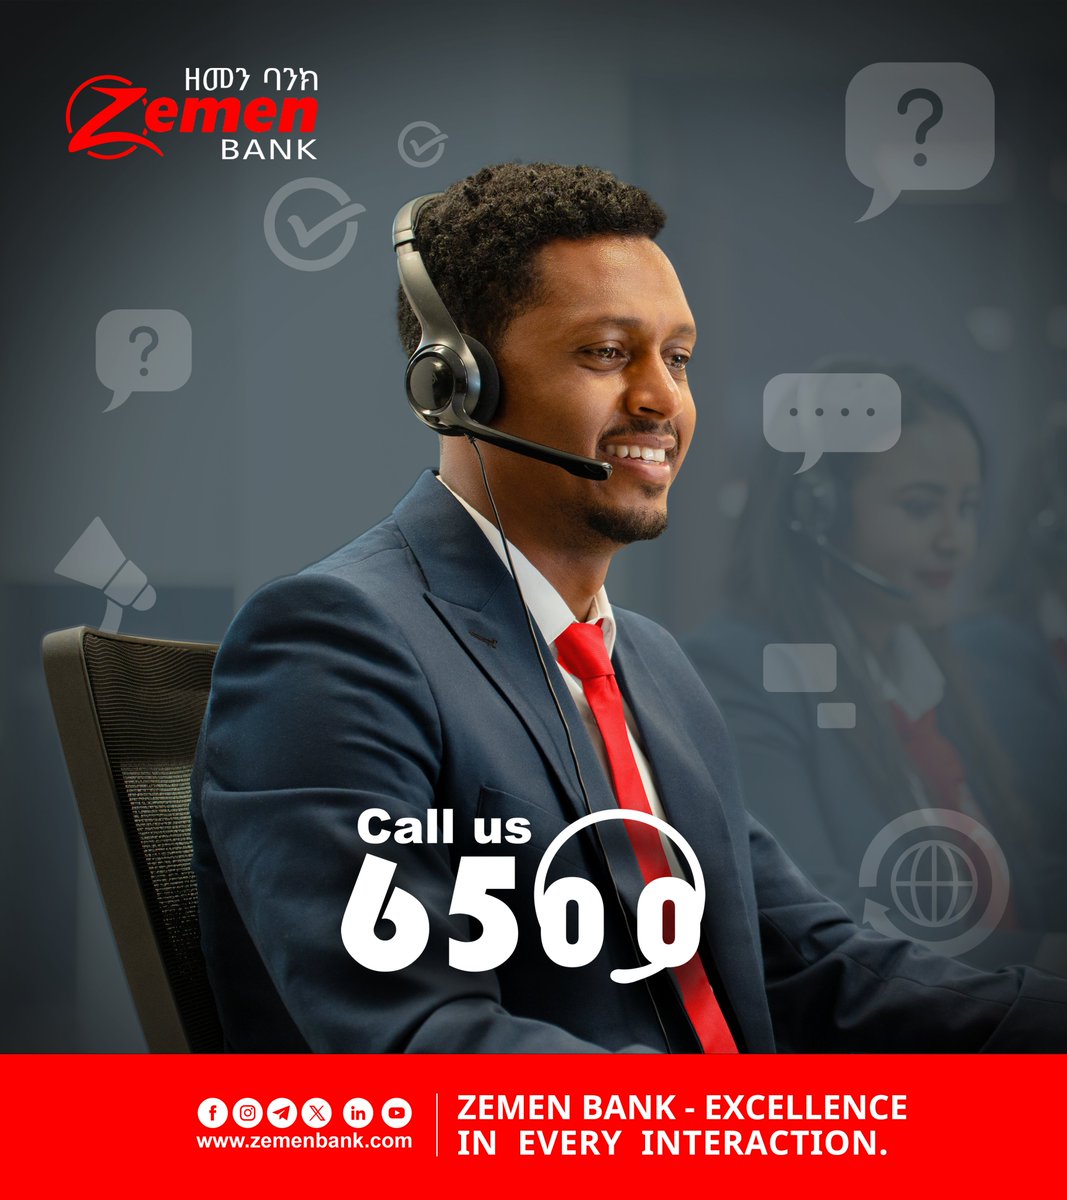 6500 for your Zemen Bank related inquiries.
***
#ዘመንባንክ #callcenter #customerservices #ZemenBank